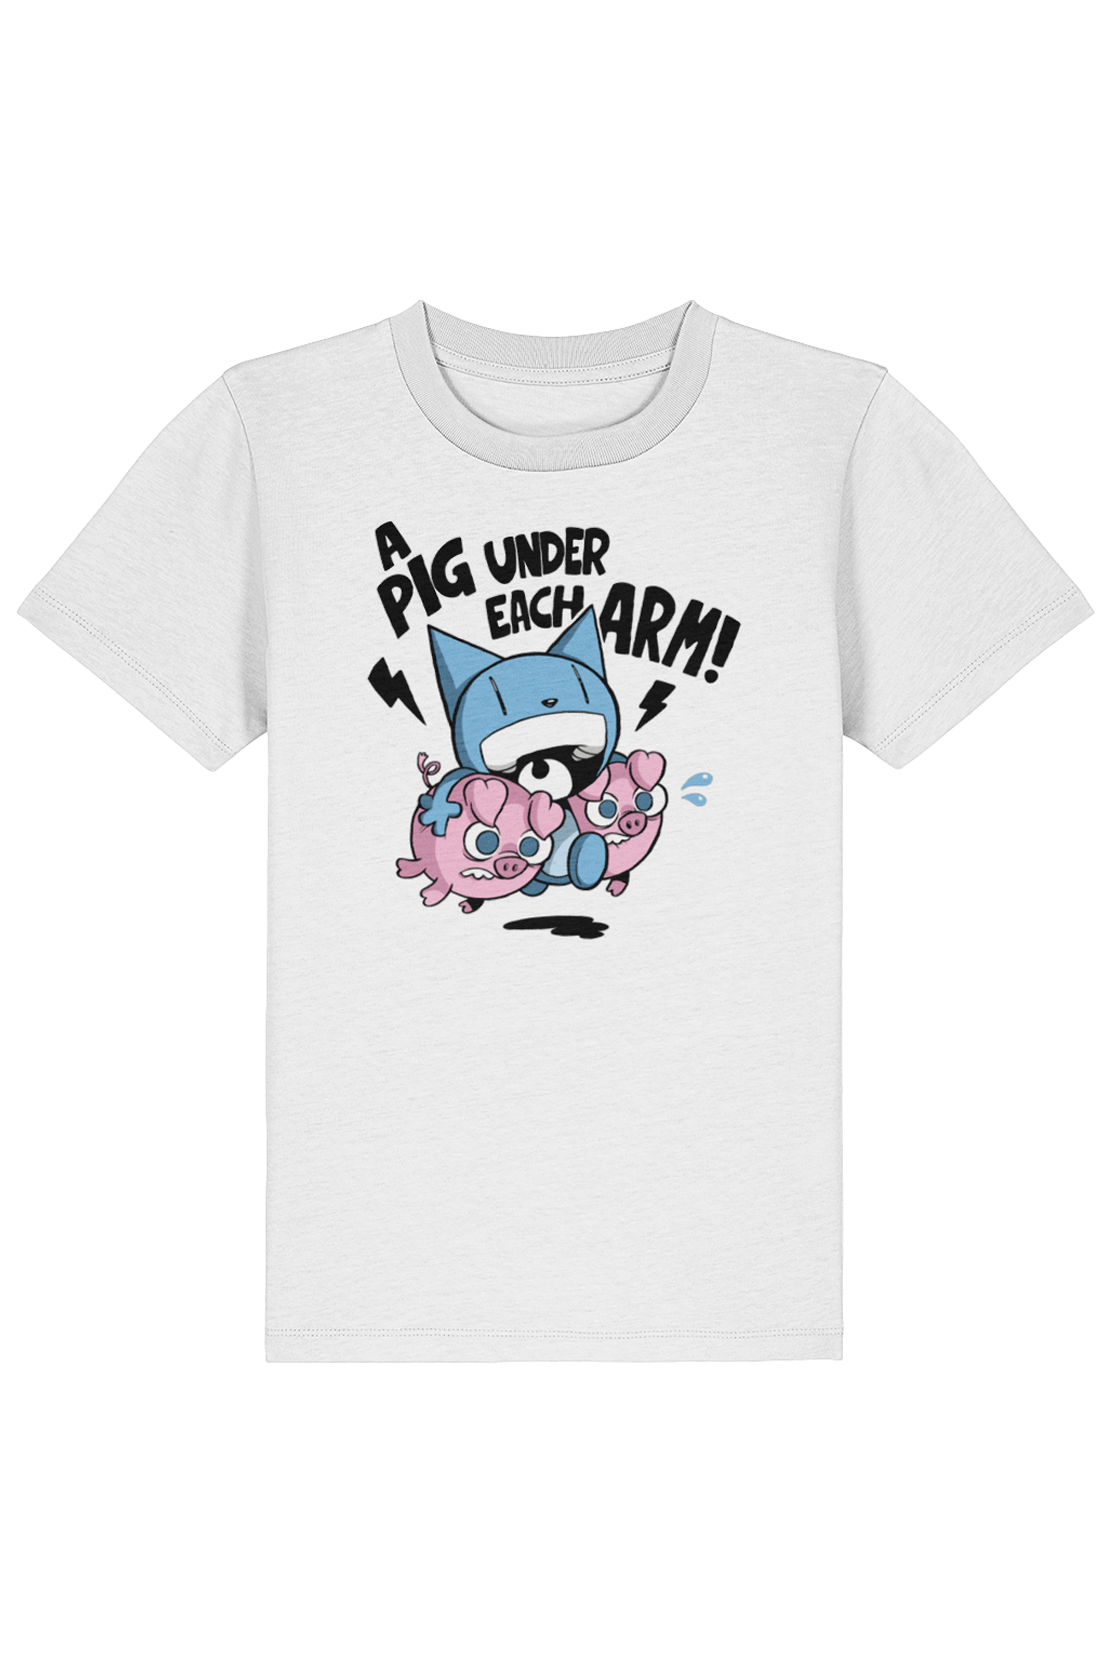 Looshkin "A pig under each arm!" kids t-shirt